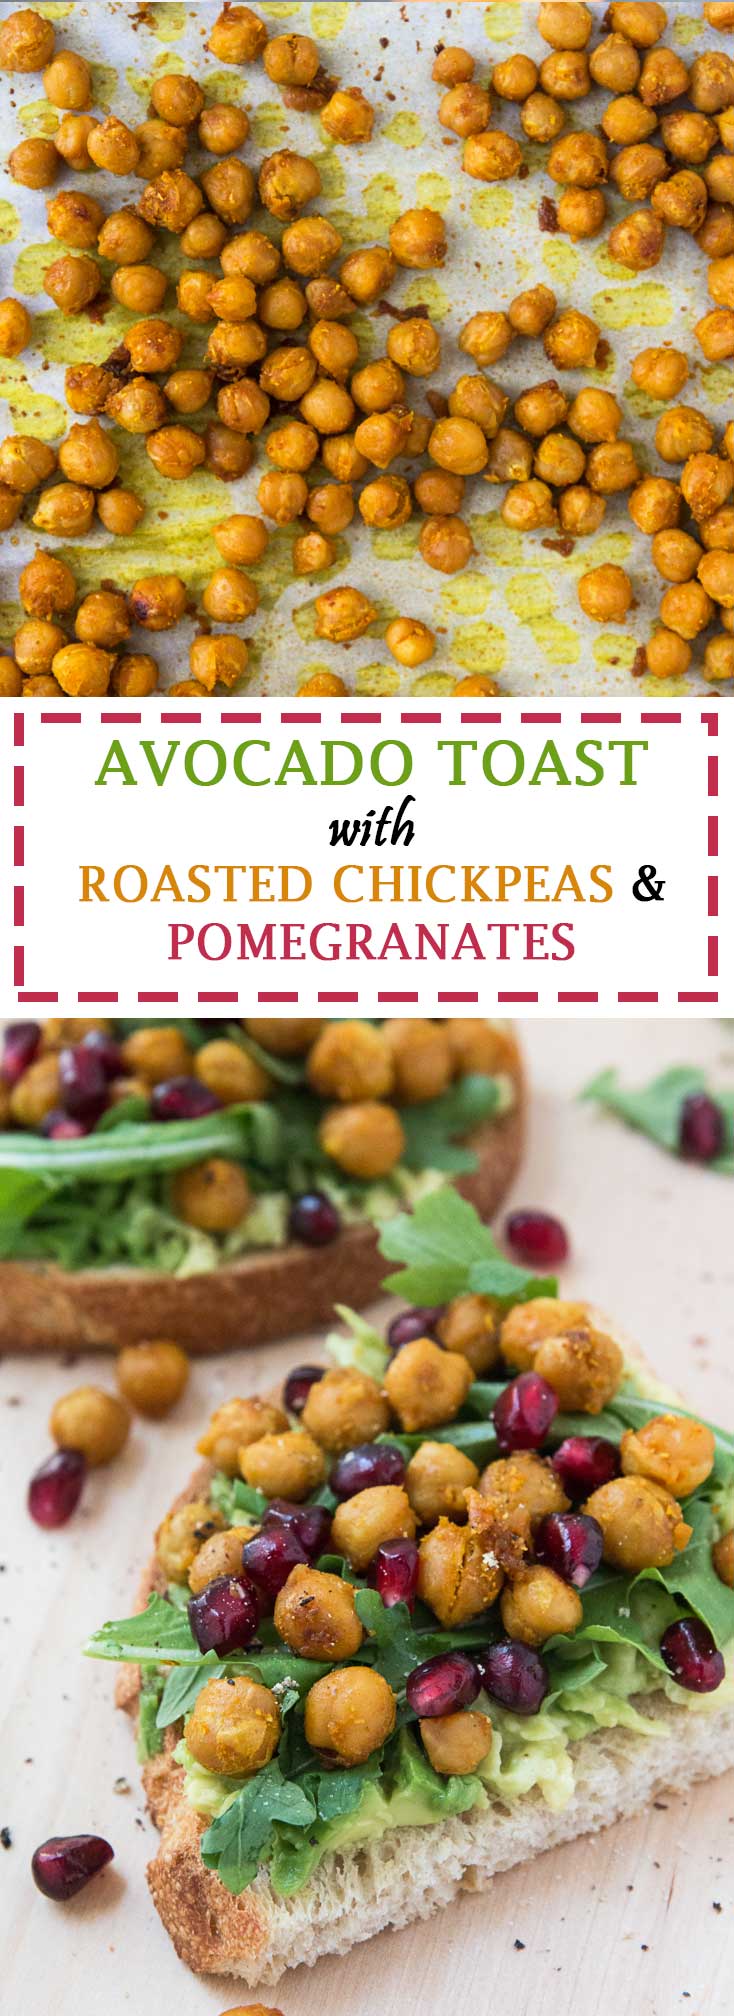 Avocado Toast Recipe with Roasted Chickpeas, Arugula, & Pomegranate Seeds #vegan #glutenfree | www.vegetariangastronomy.com